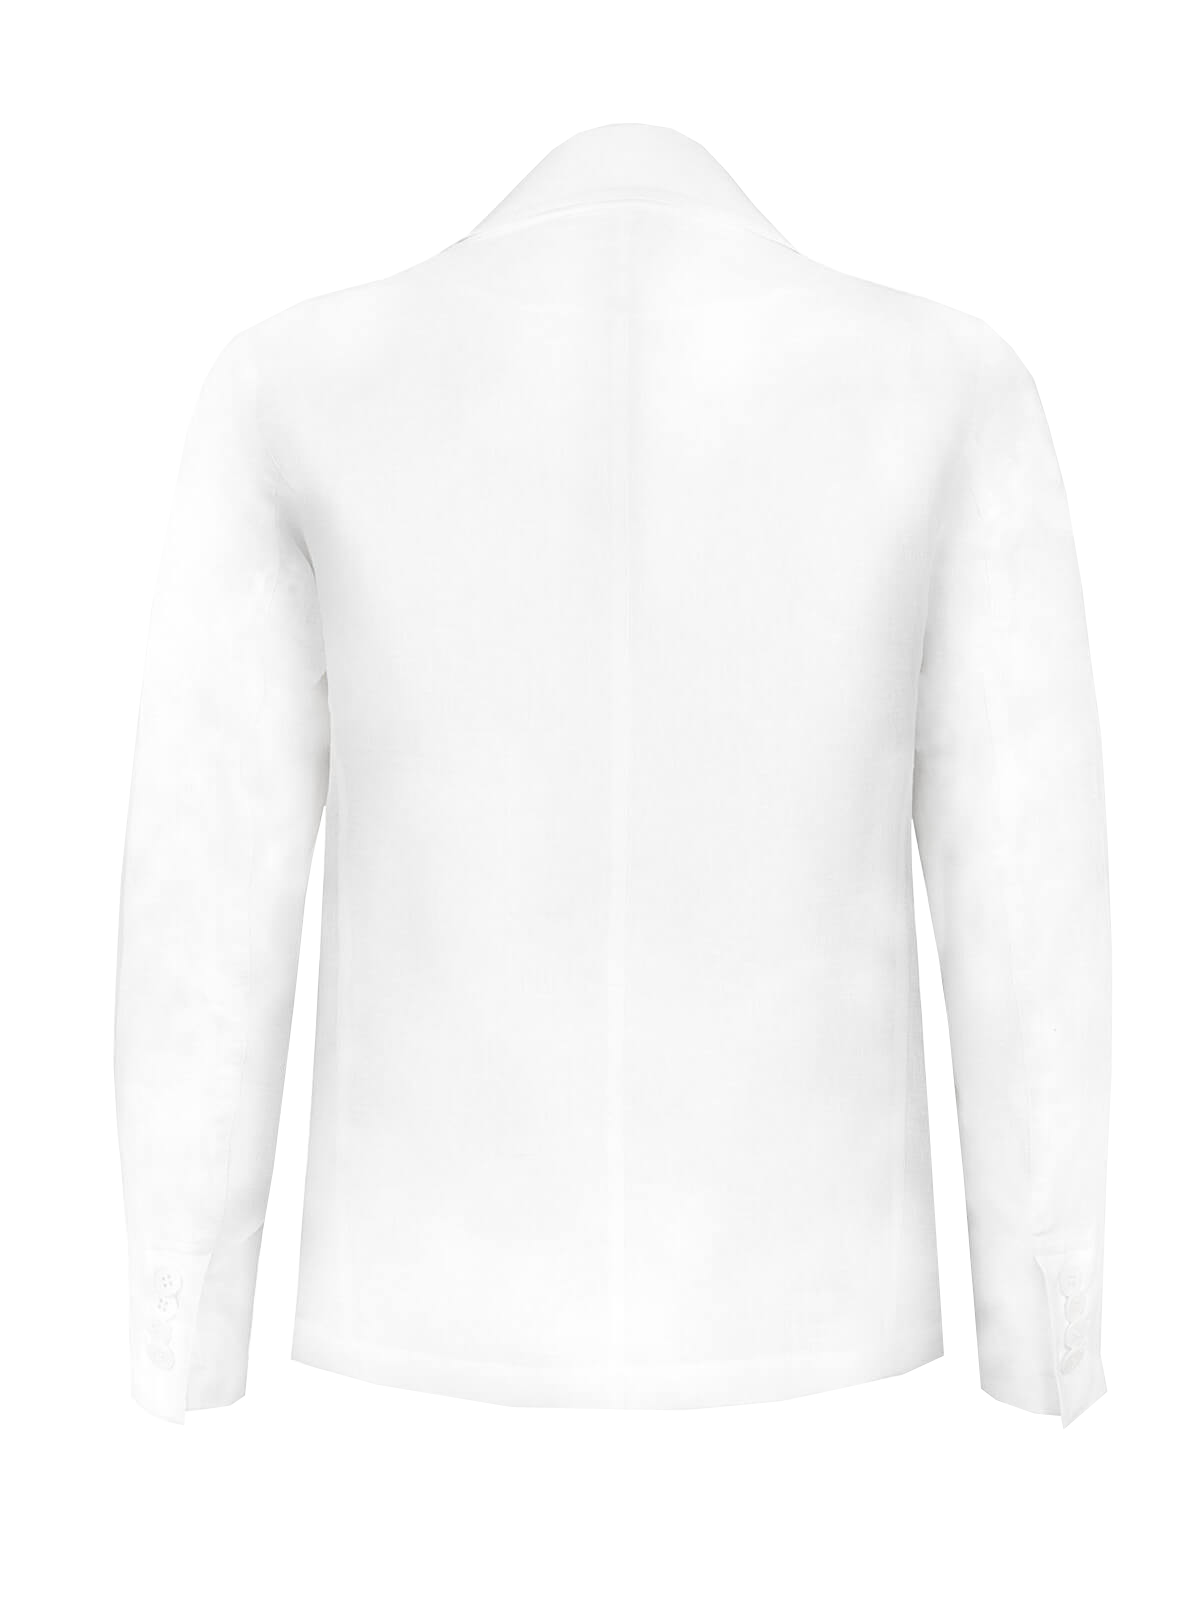 Giacca St. Tropez 100% Capri white linen jacket for man back